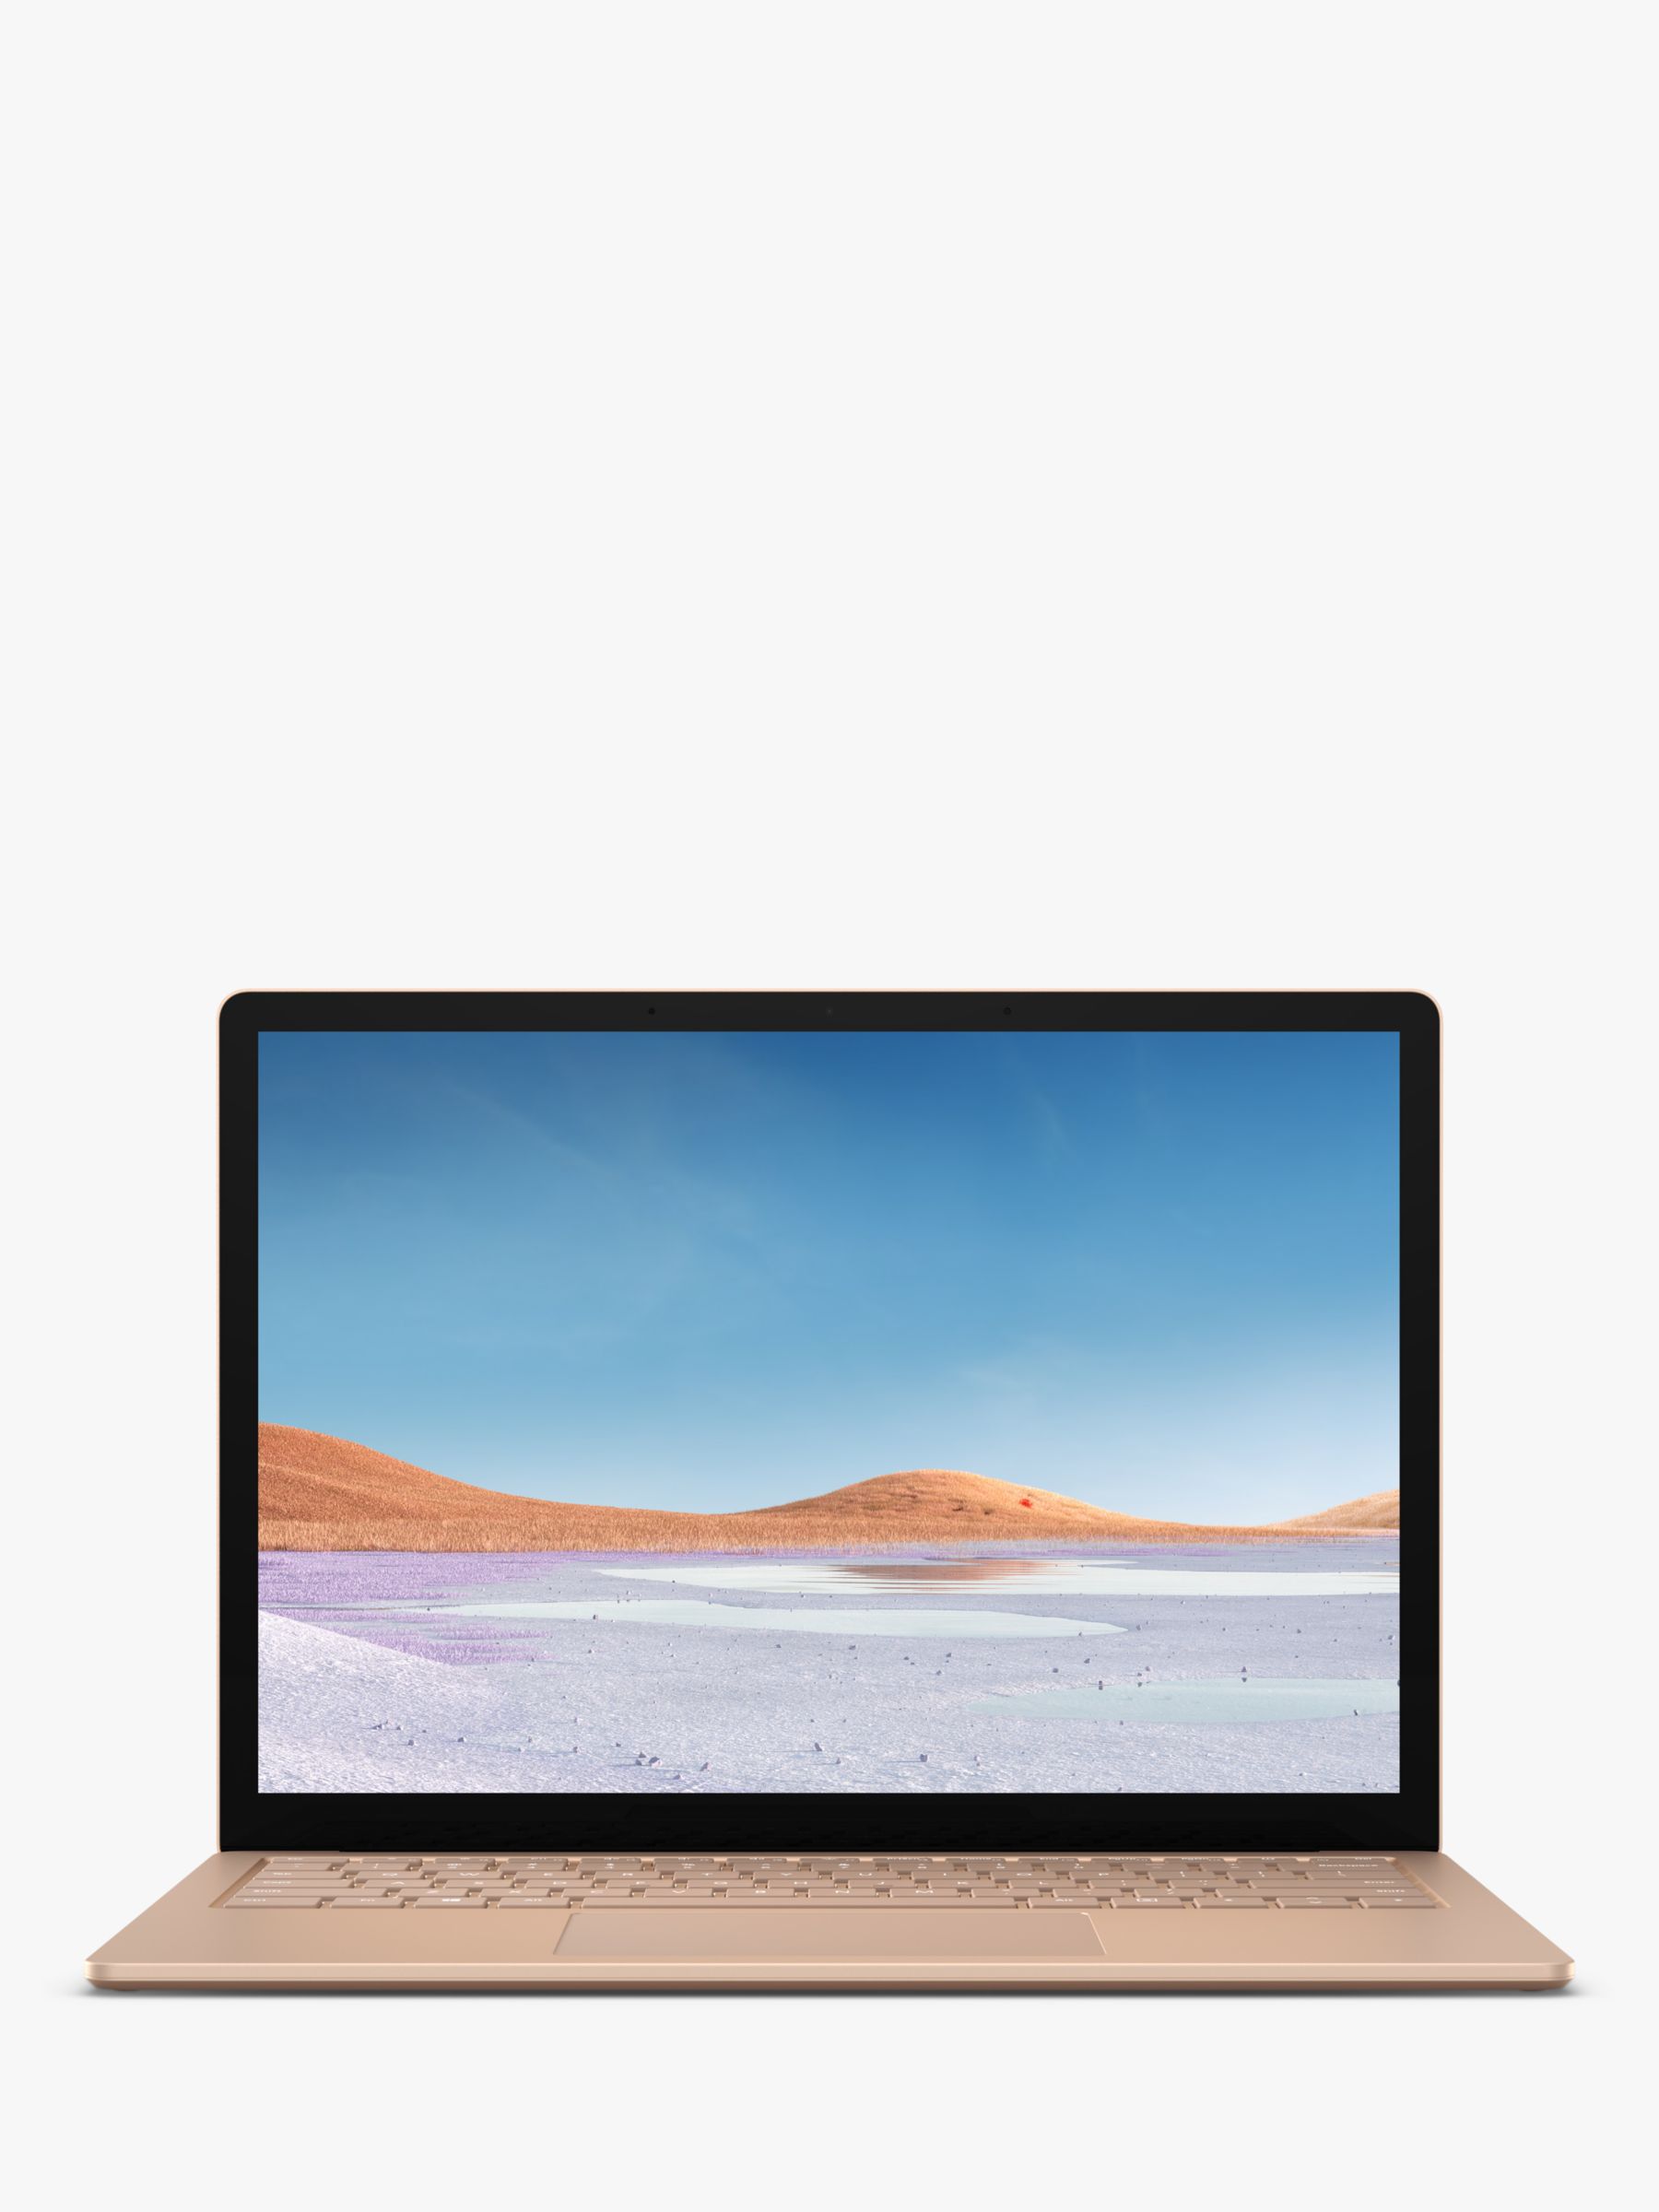 Microsoft Surface Laptop 3, Intel Core i7 Processor, 16GB RAM, 512GB SSD, 13.5" PixelSense Display